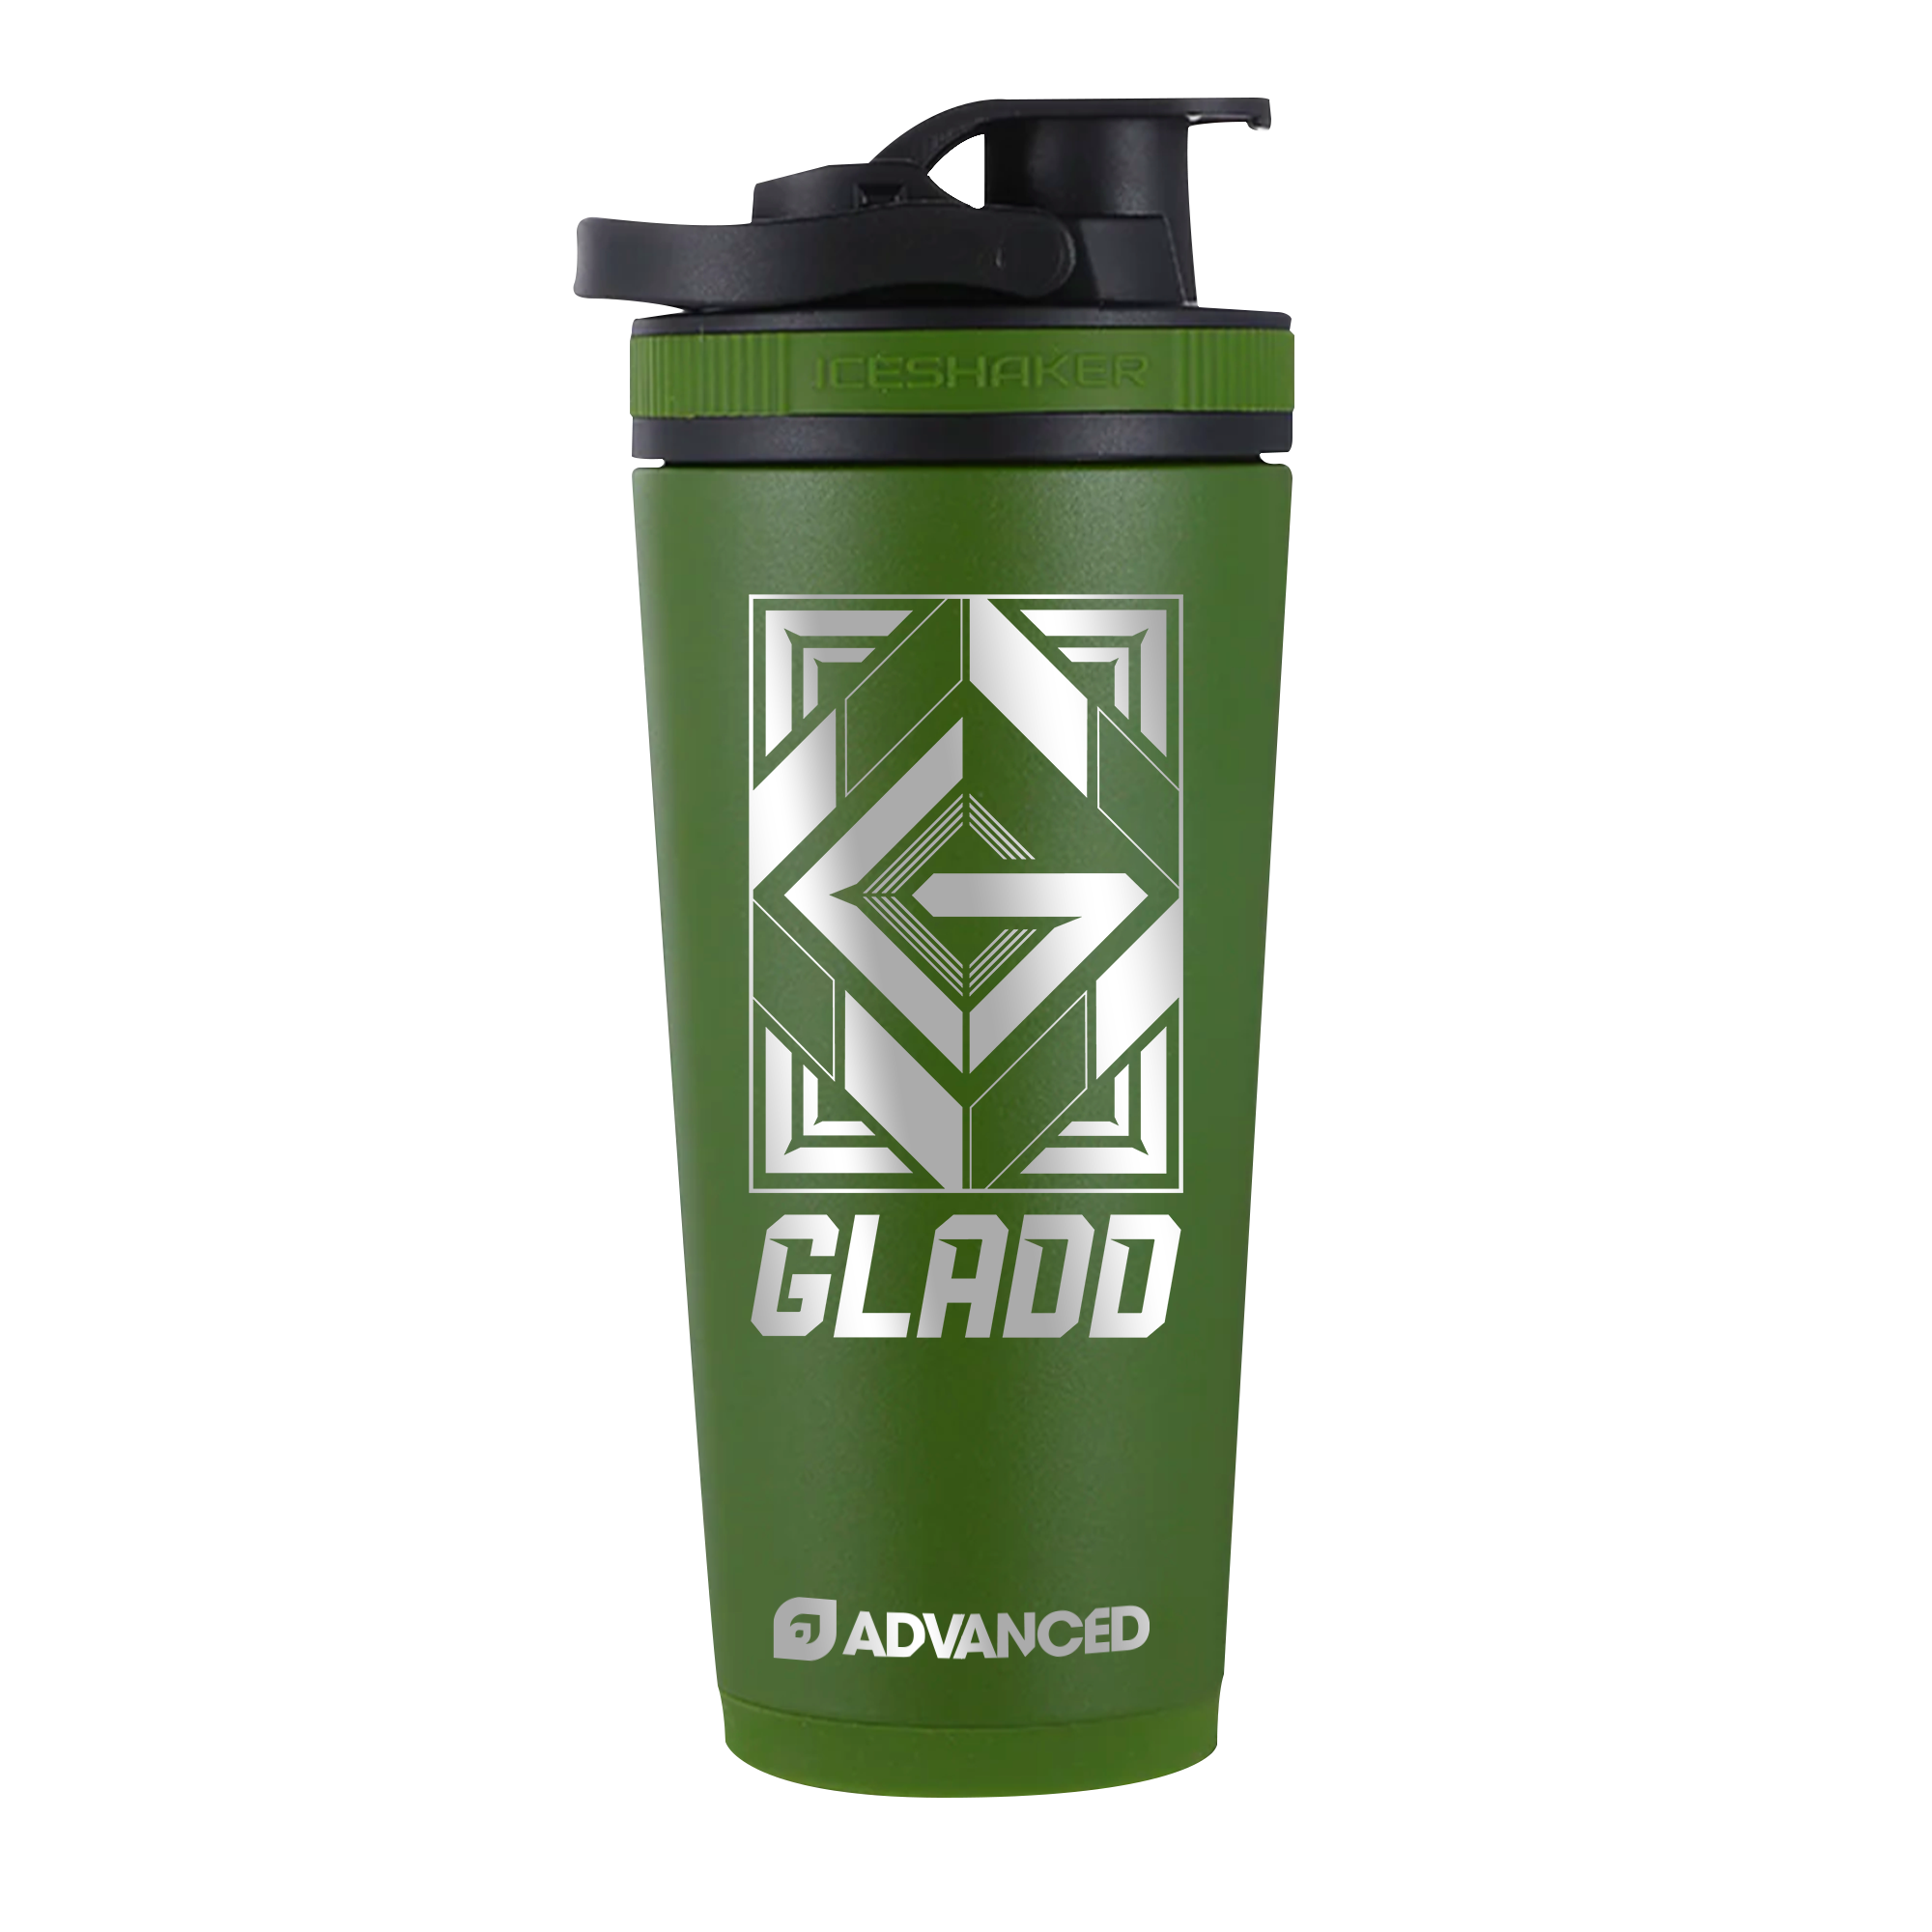 Gladd x ADVANCED Premium 26oz Ice Shaker - Green